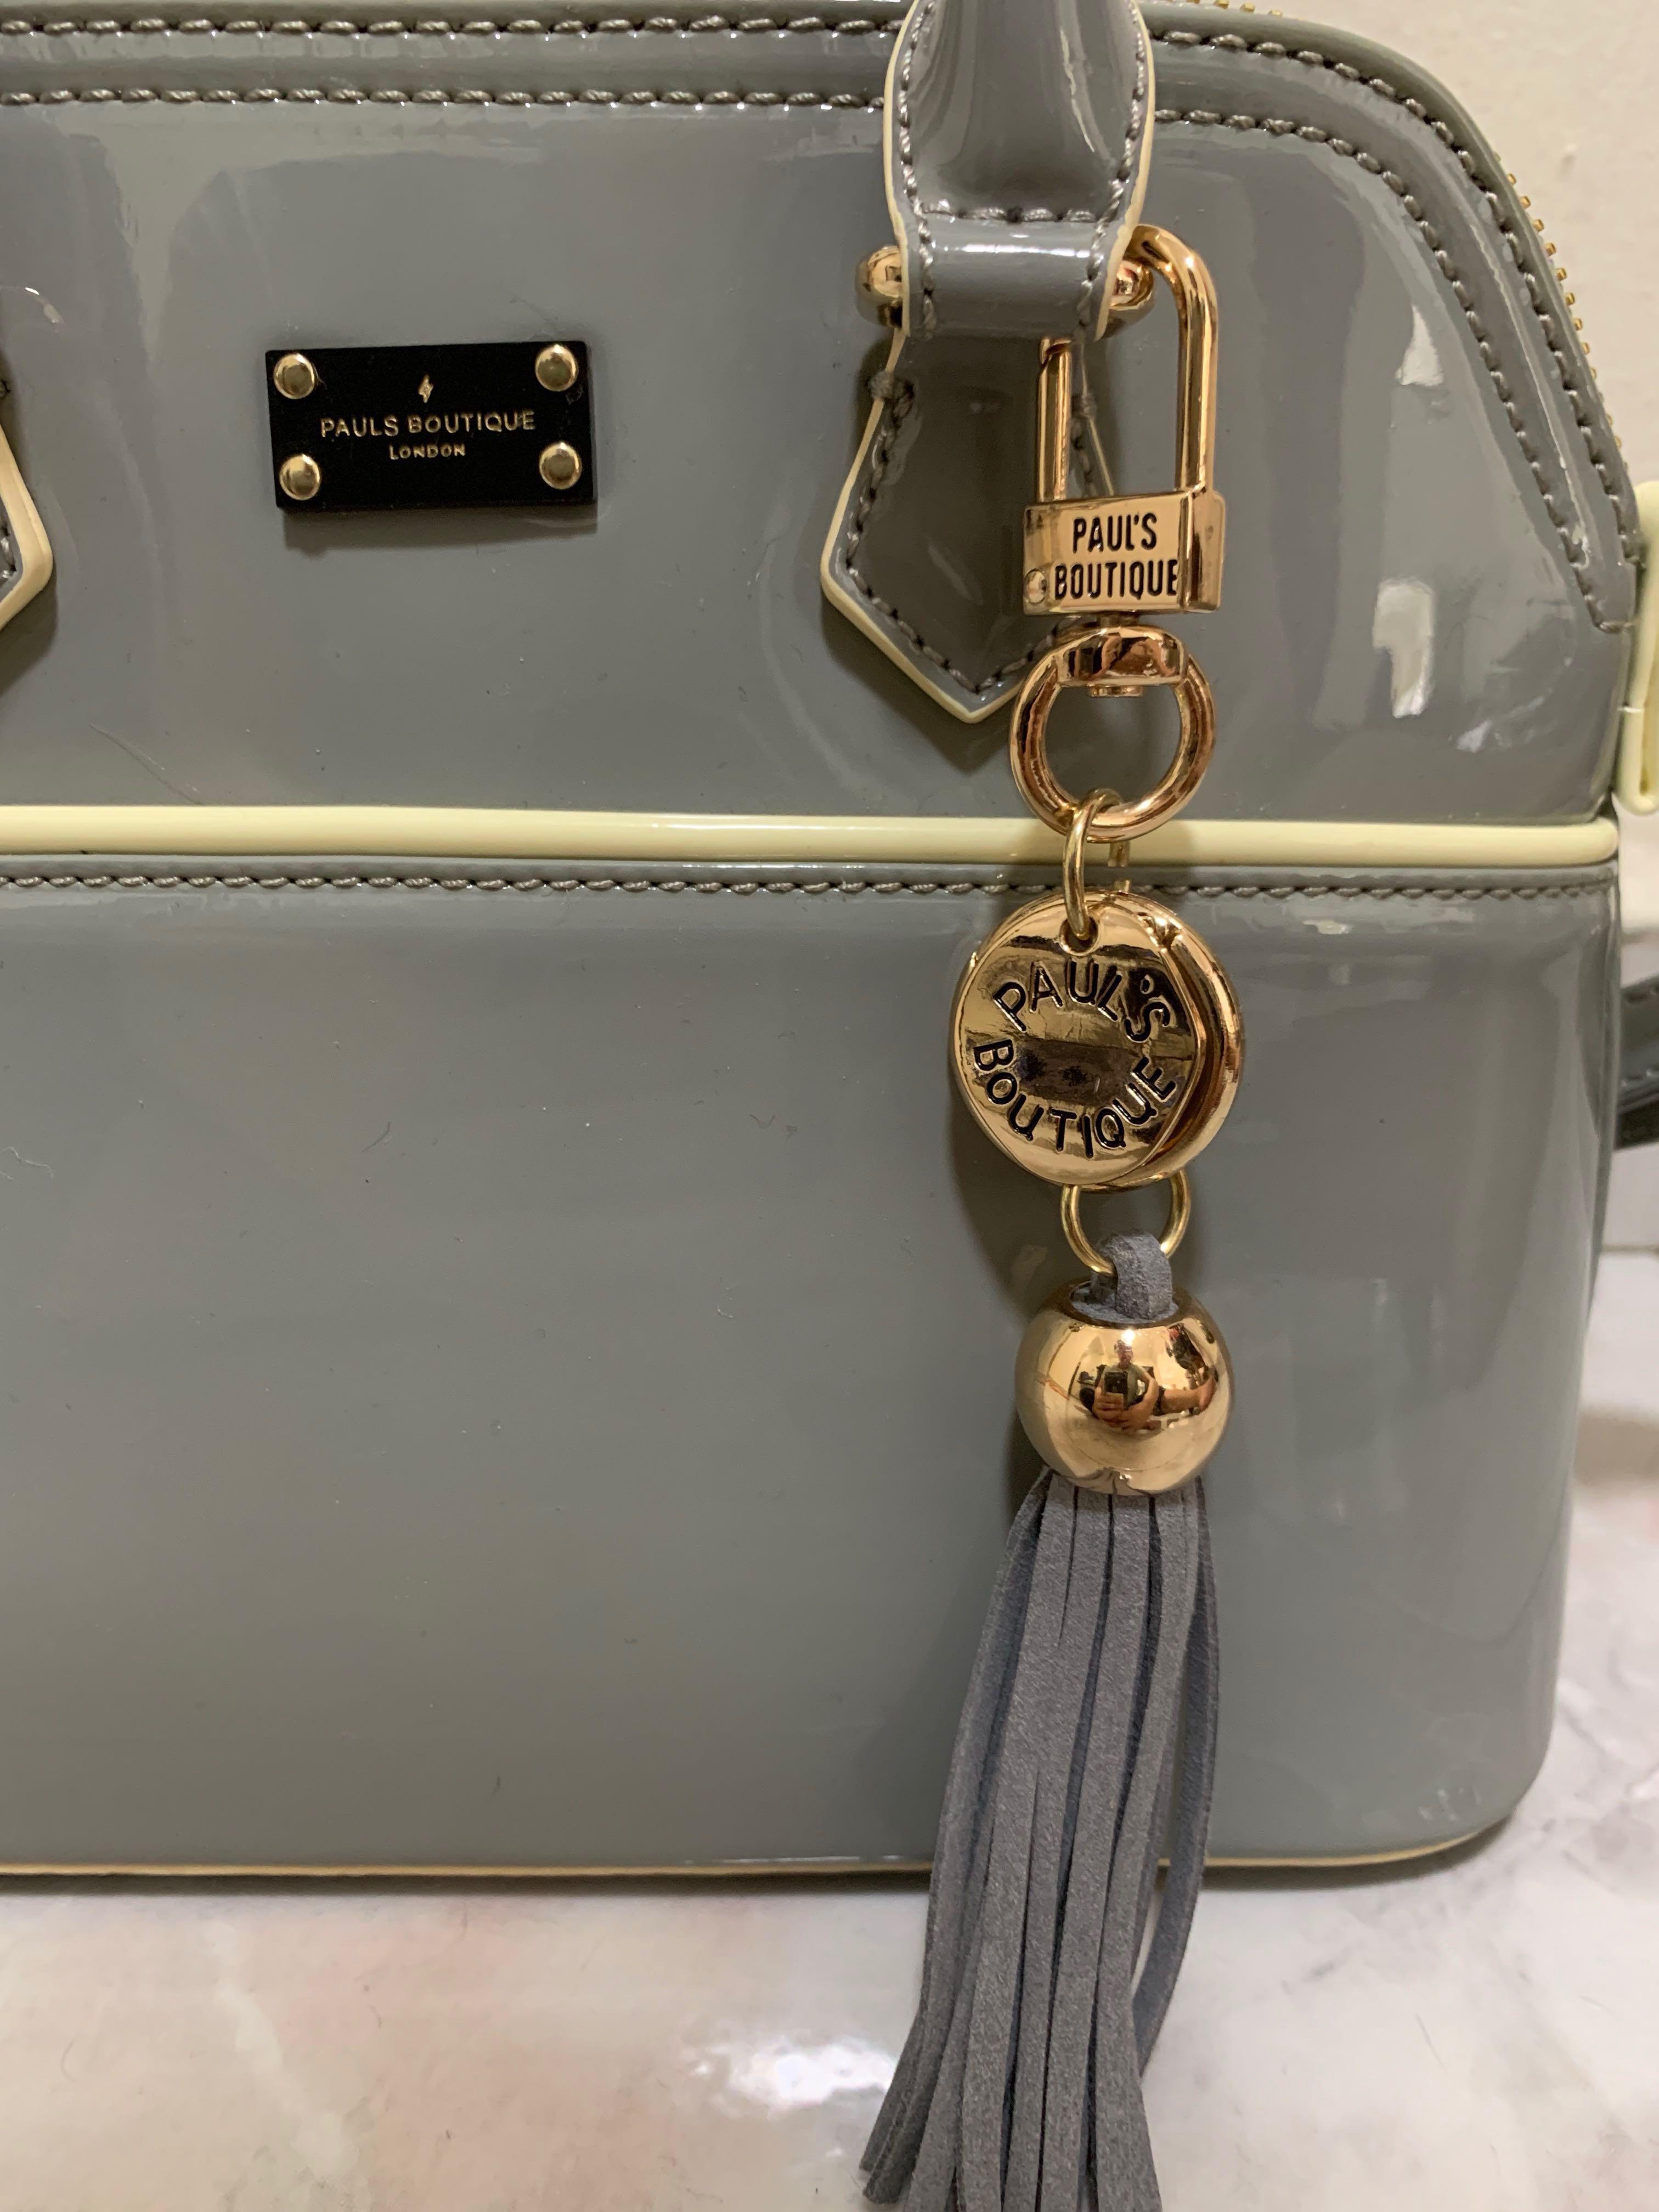 Paul's Boutique: Web Exclusive handbags online now. The Mini-Maisy is back!